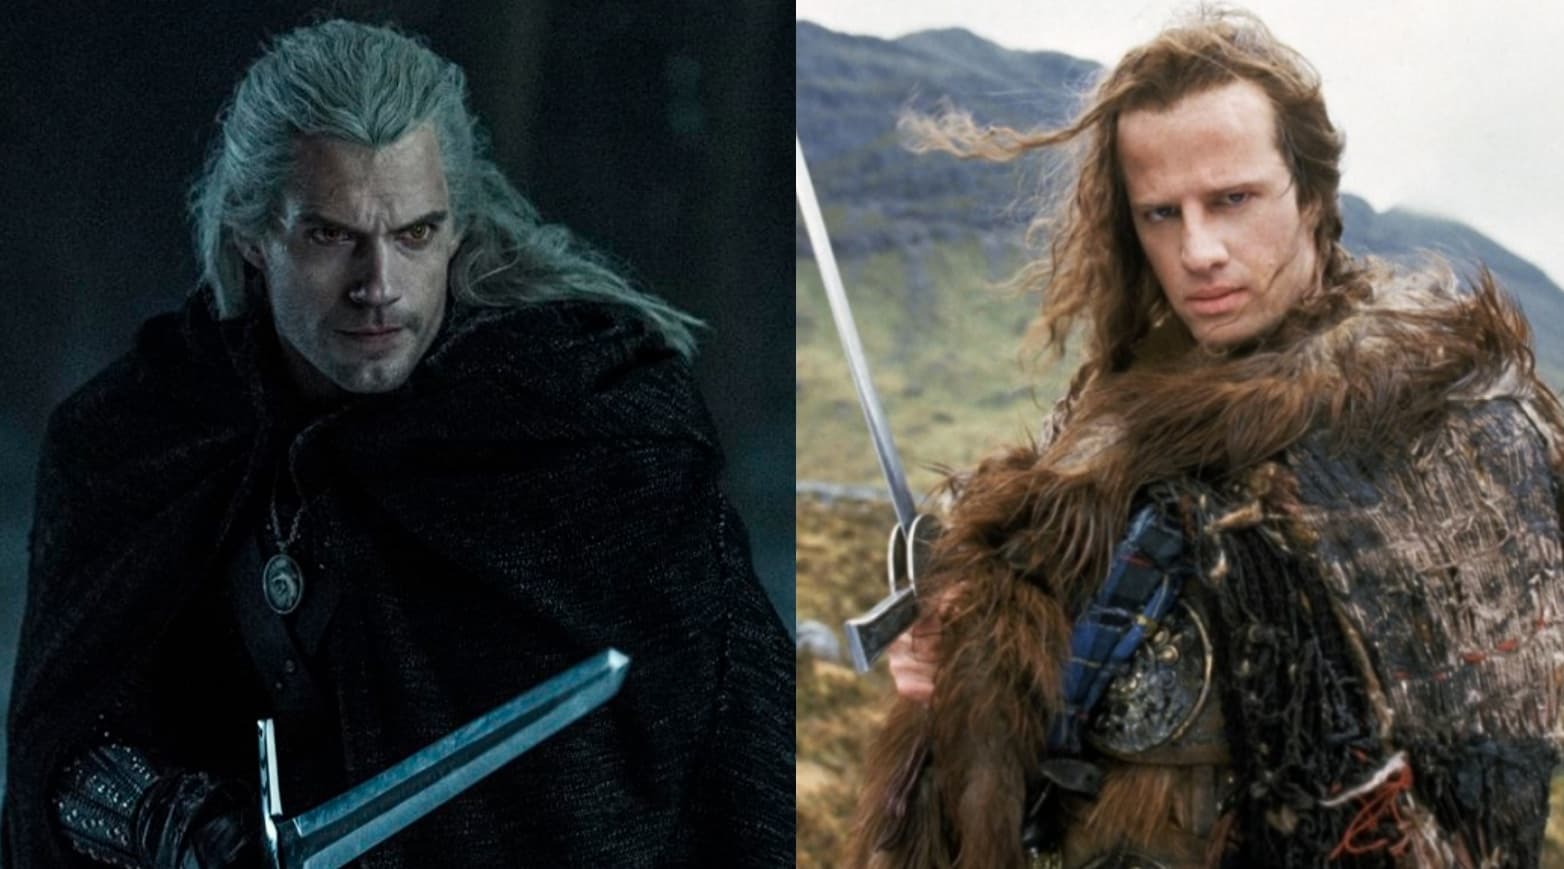 Highlander: Henry Cavill's Highlander remake could be a new film